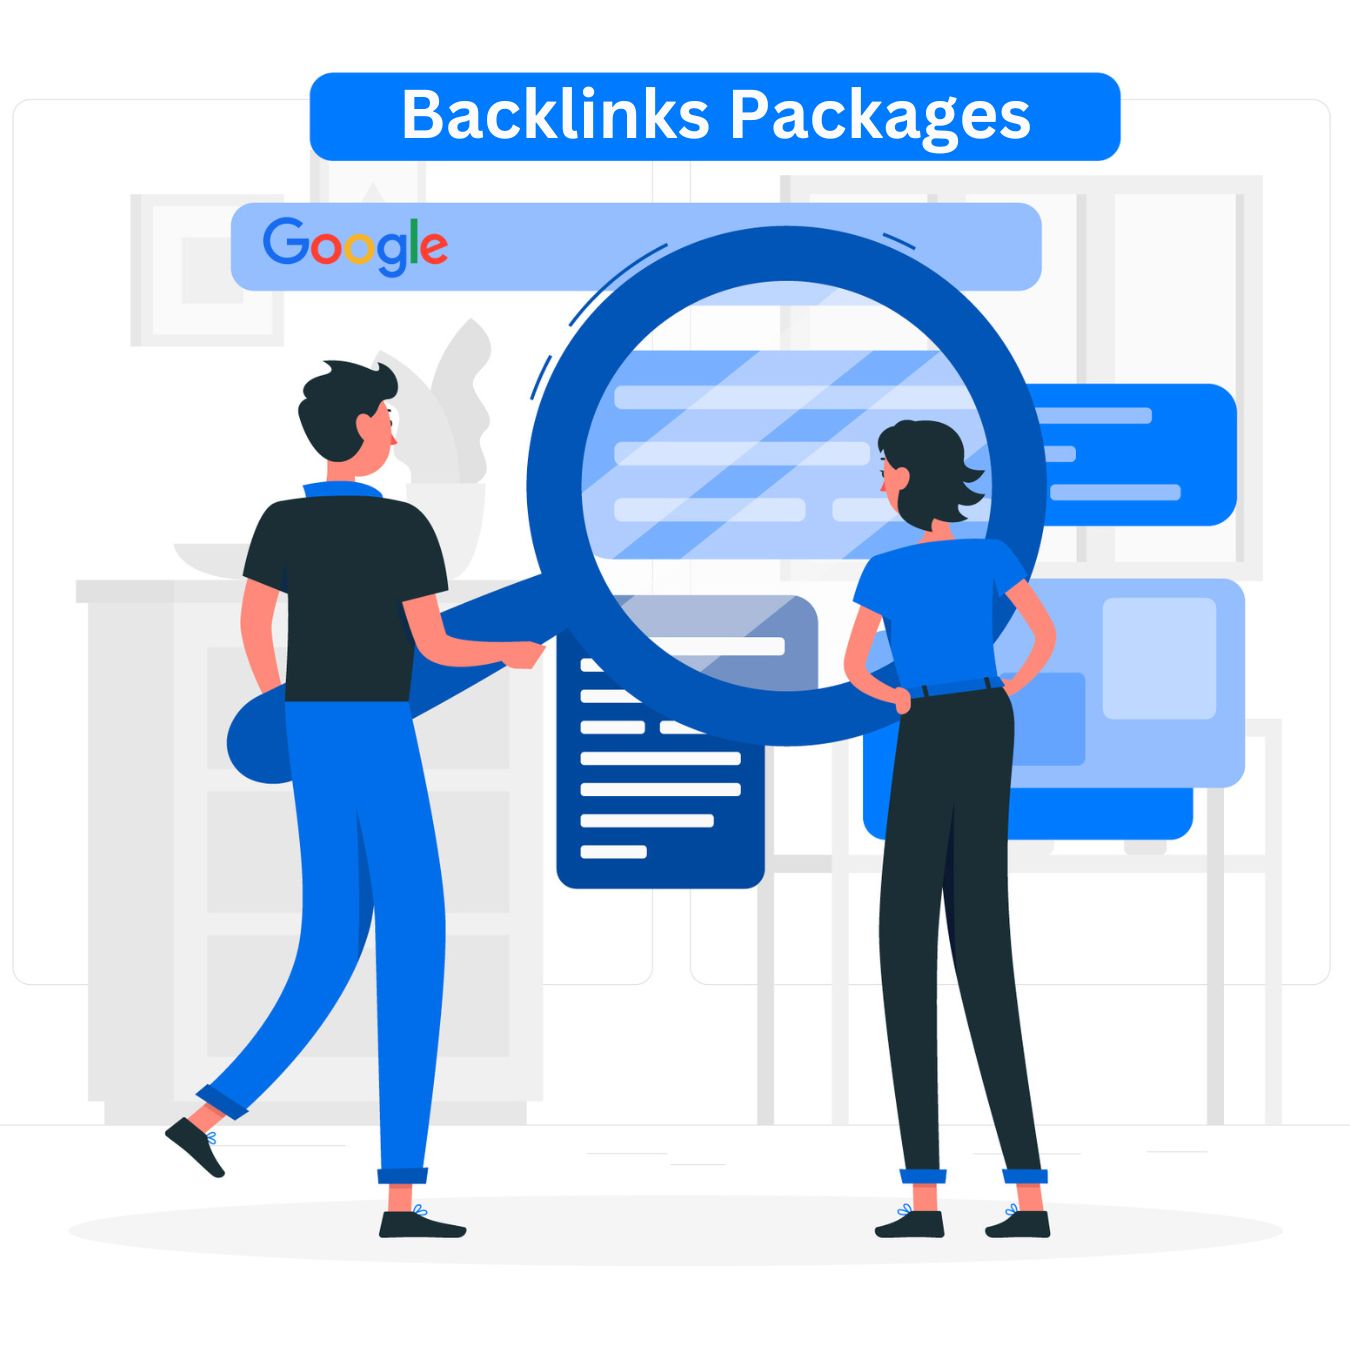 Backlinks Packages for Link Building Services